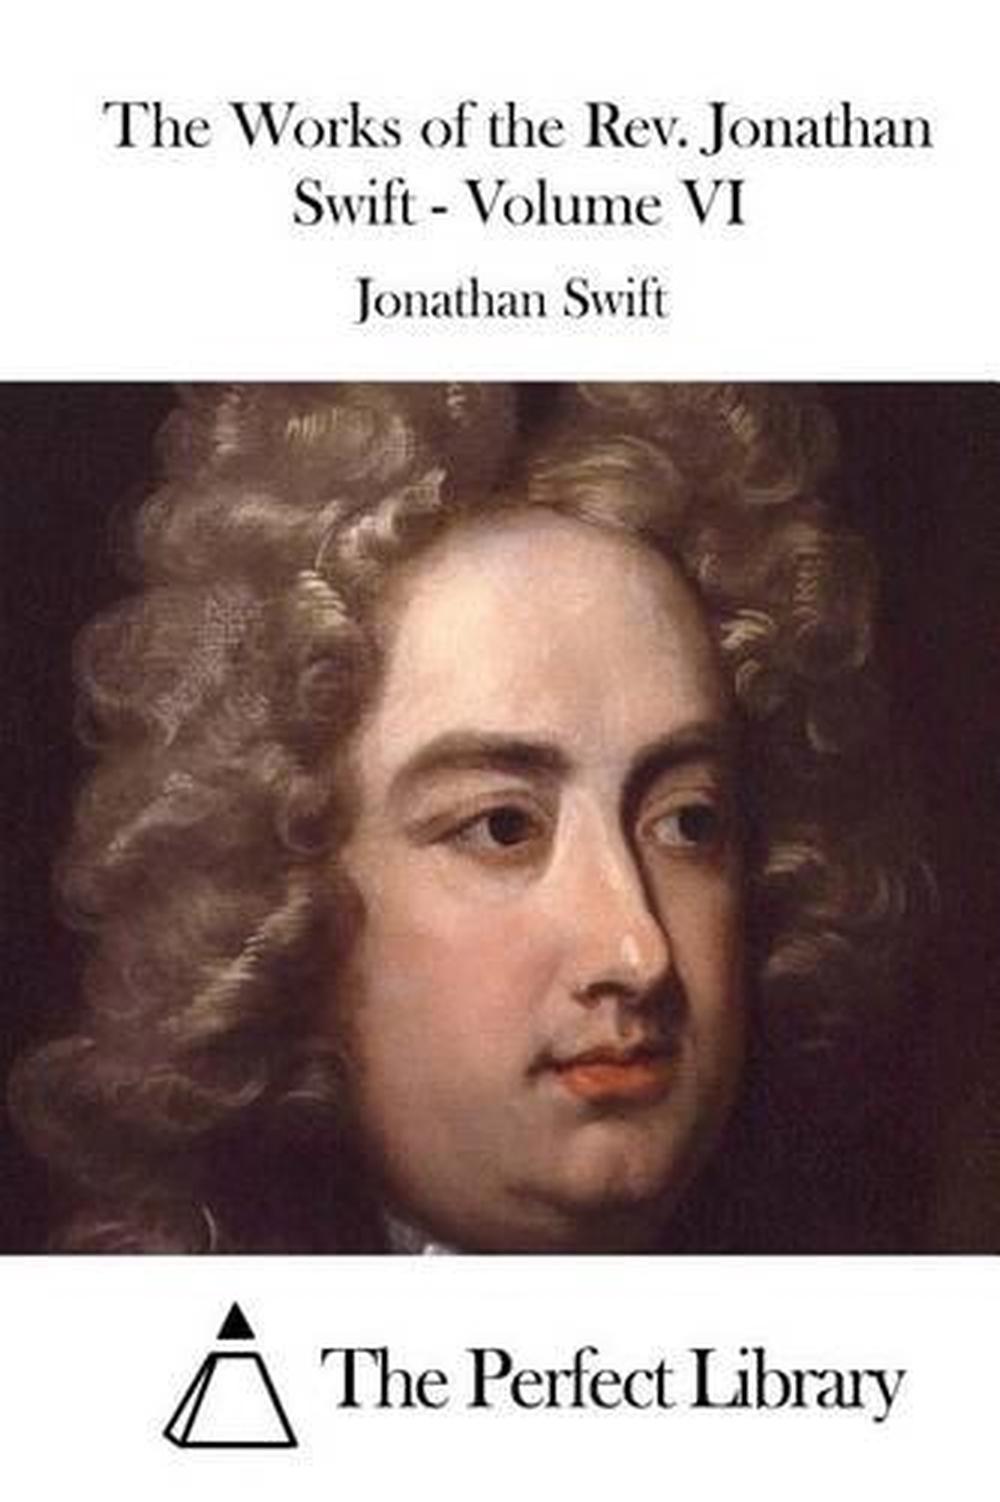 The Works of the REV. Jonathan Swift - Volume VI by Jonathan Swift ...